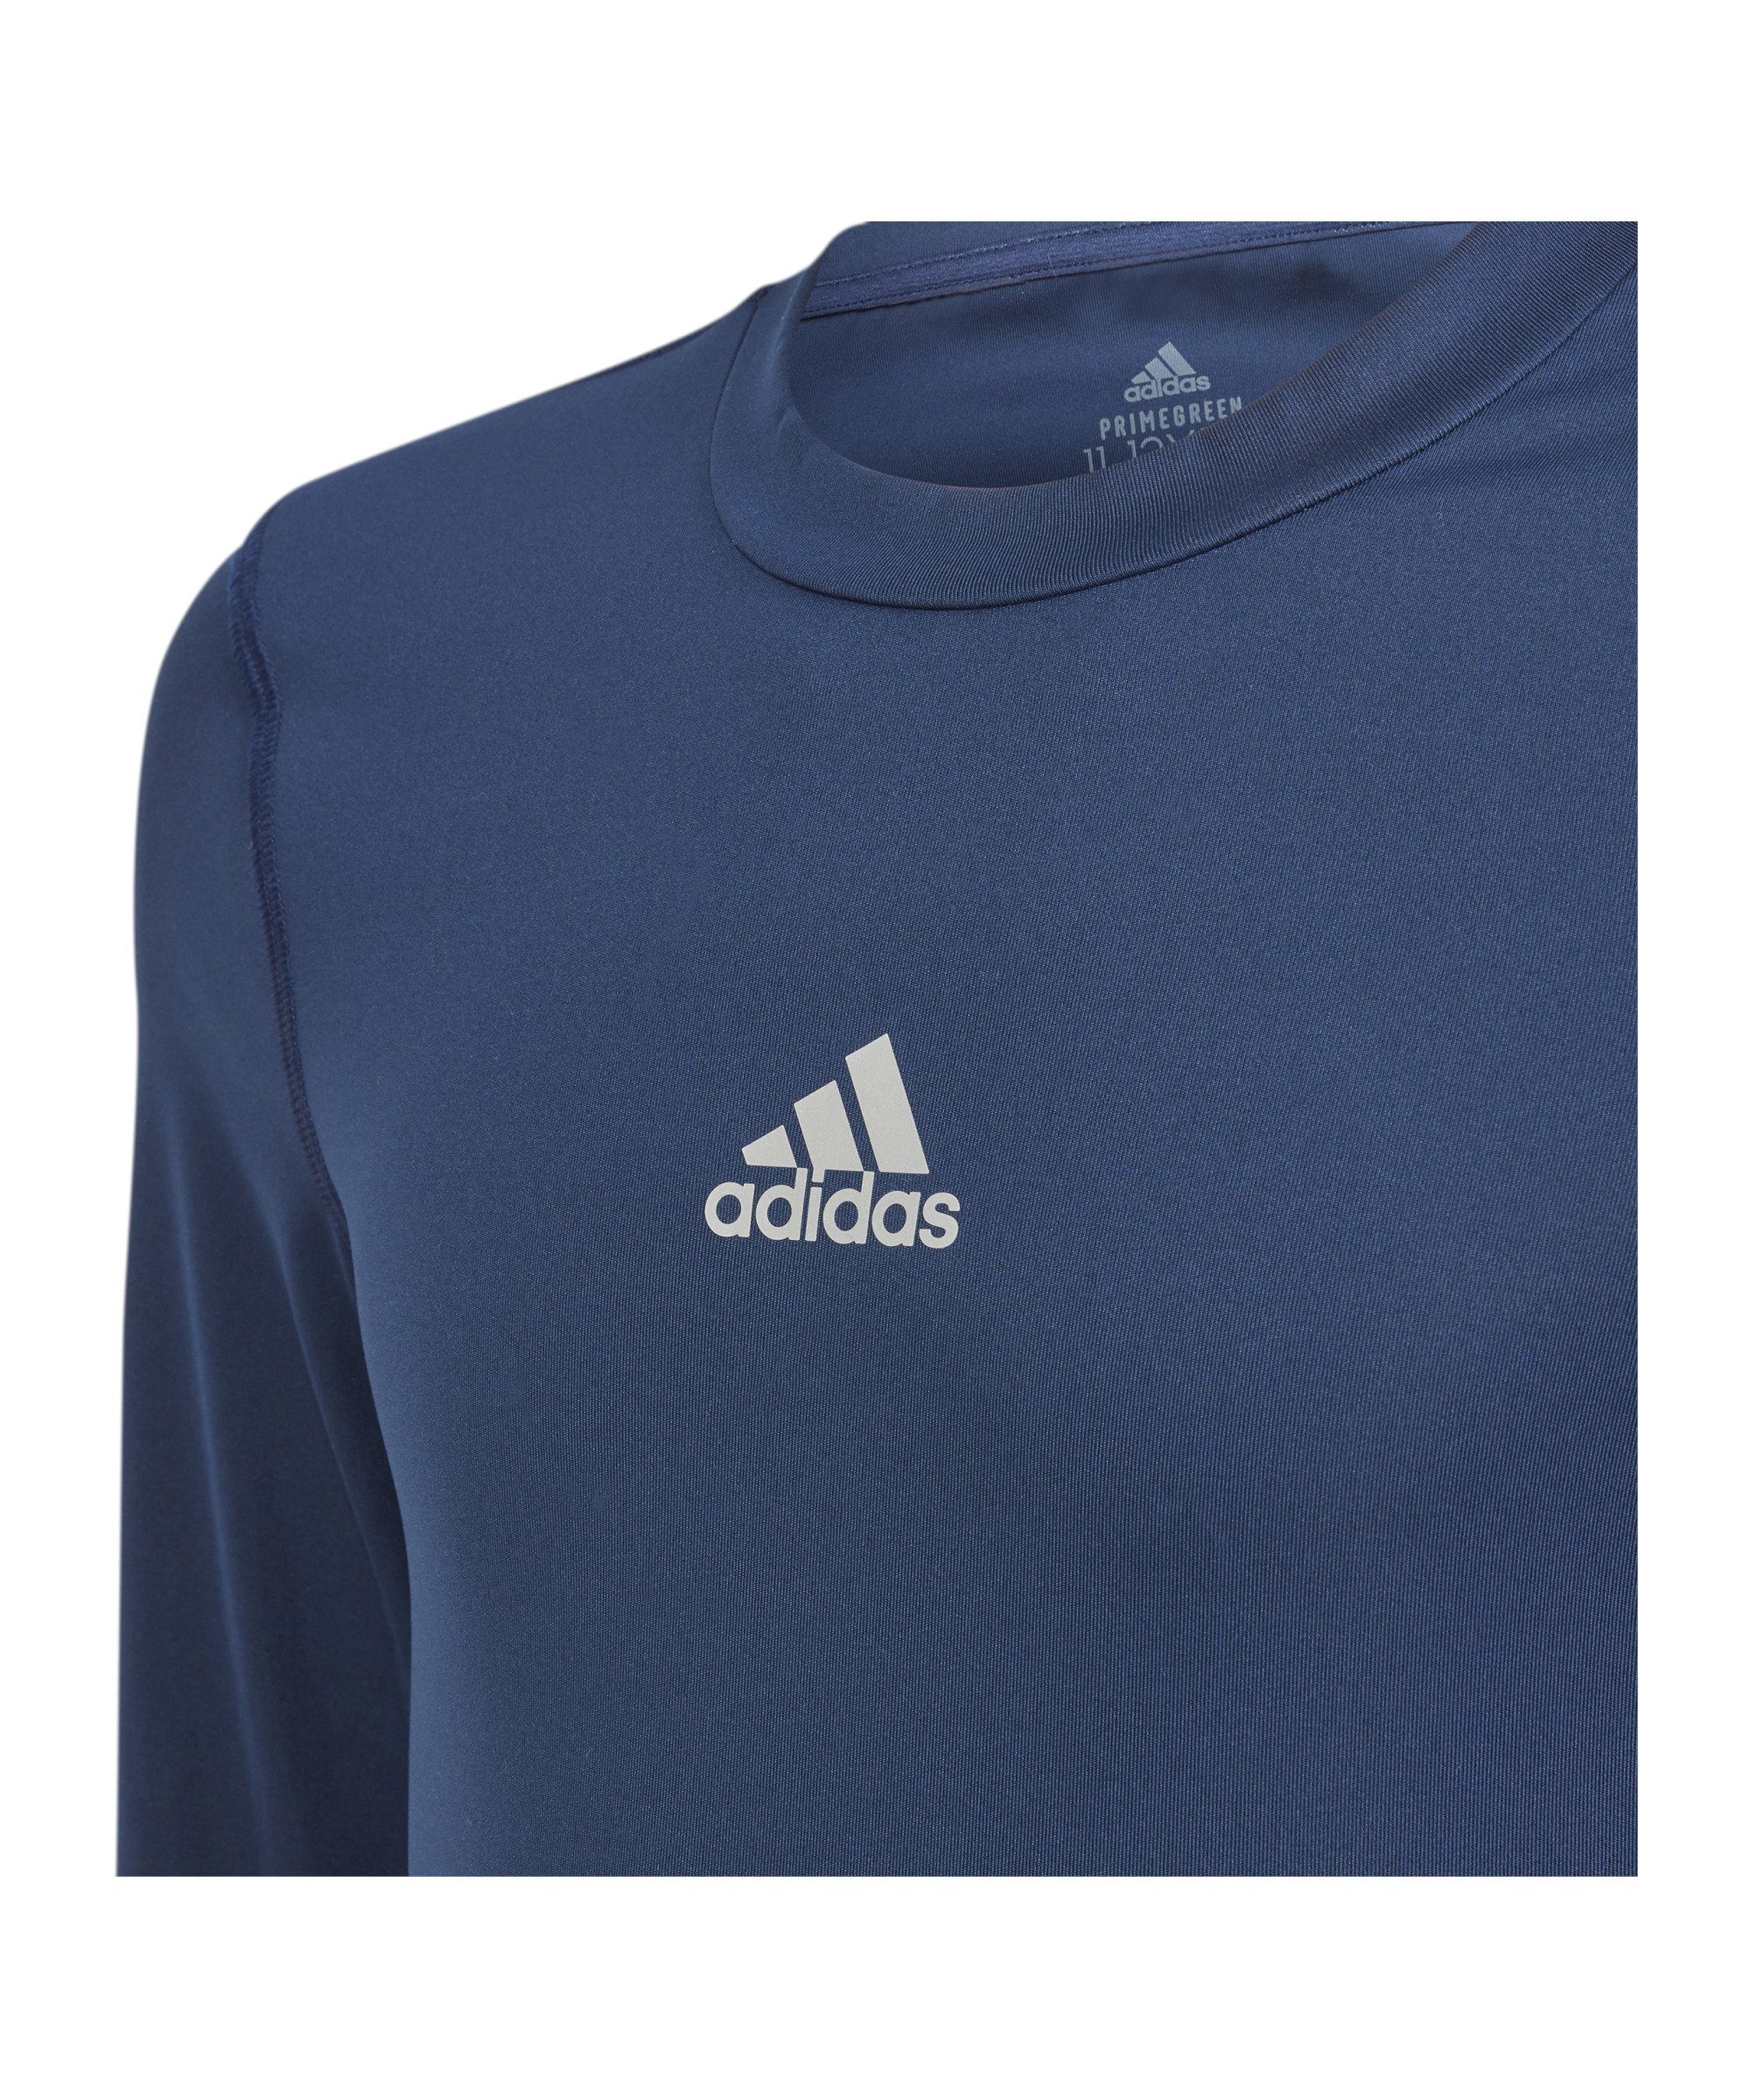 adidas Performance Kids Sweatshirt Techfit Sweatshirt blauweiss